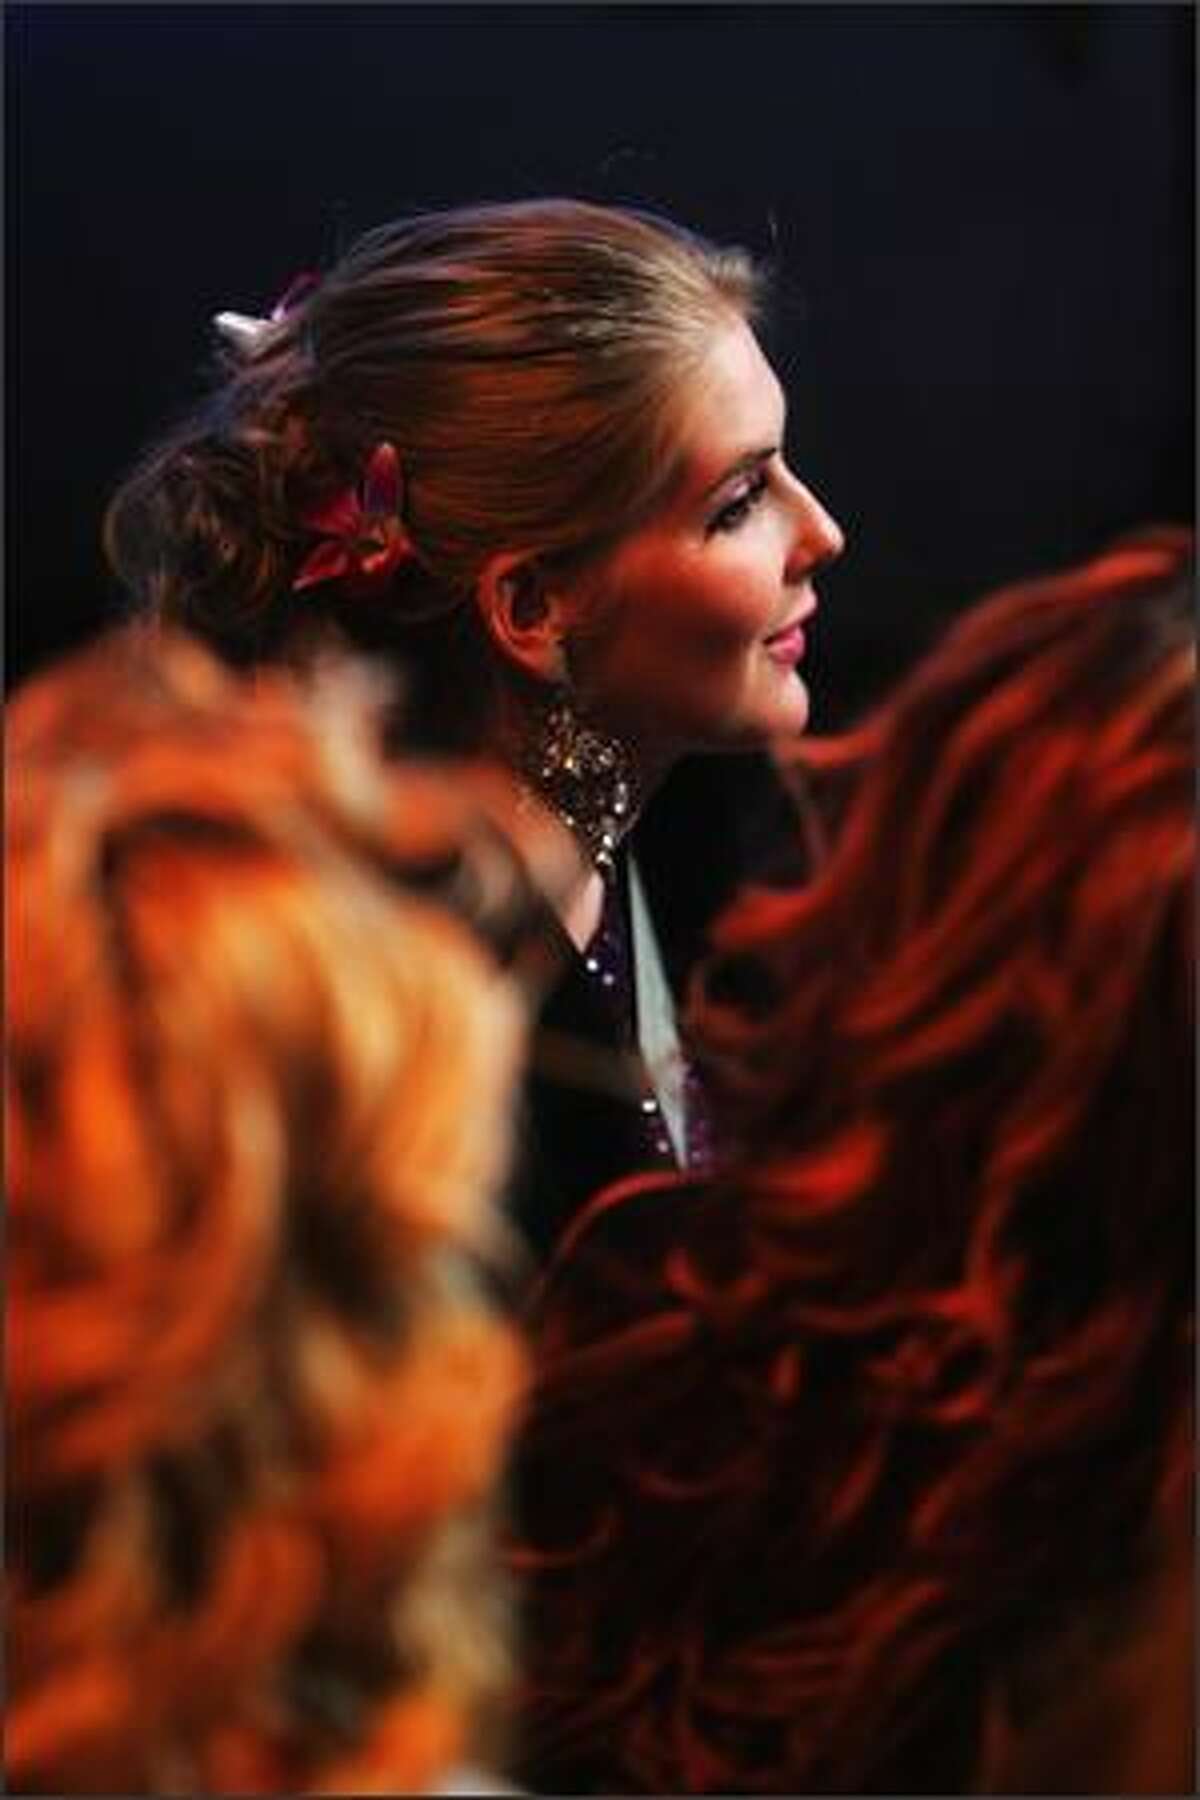 Caroline Pemberton, Miss Australia 2007, looks on in a TV studio.